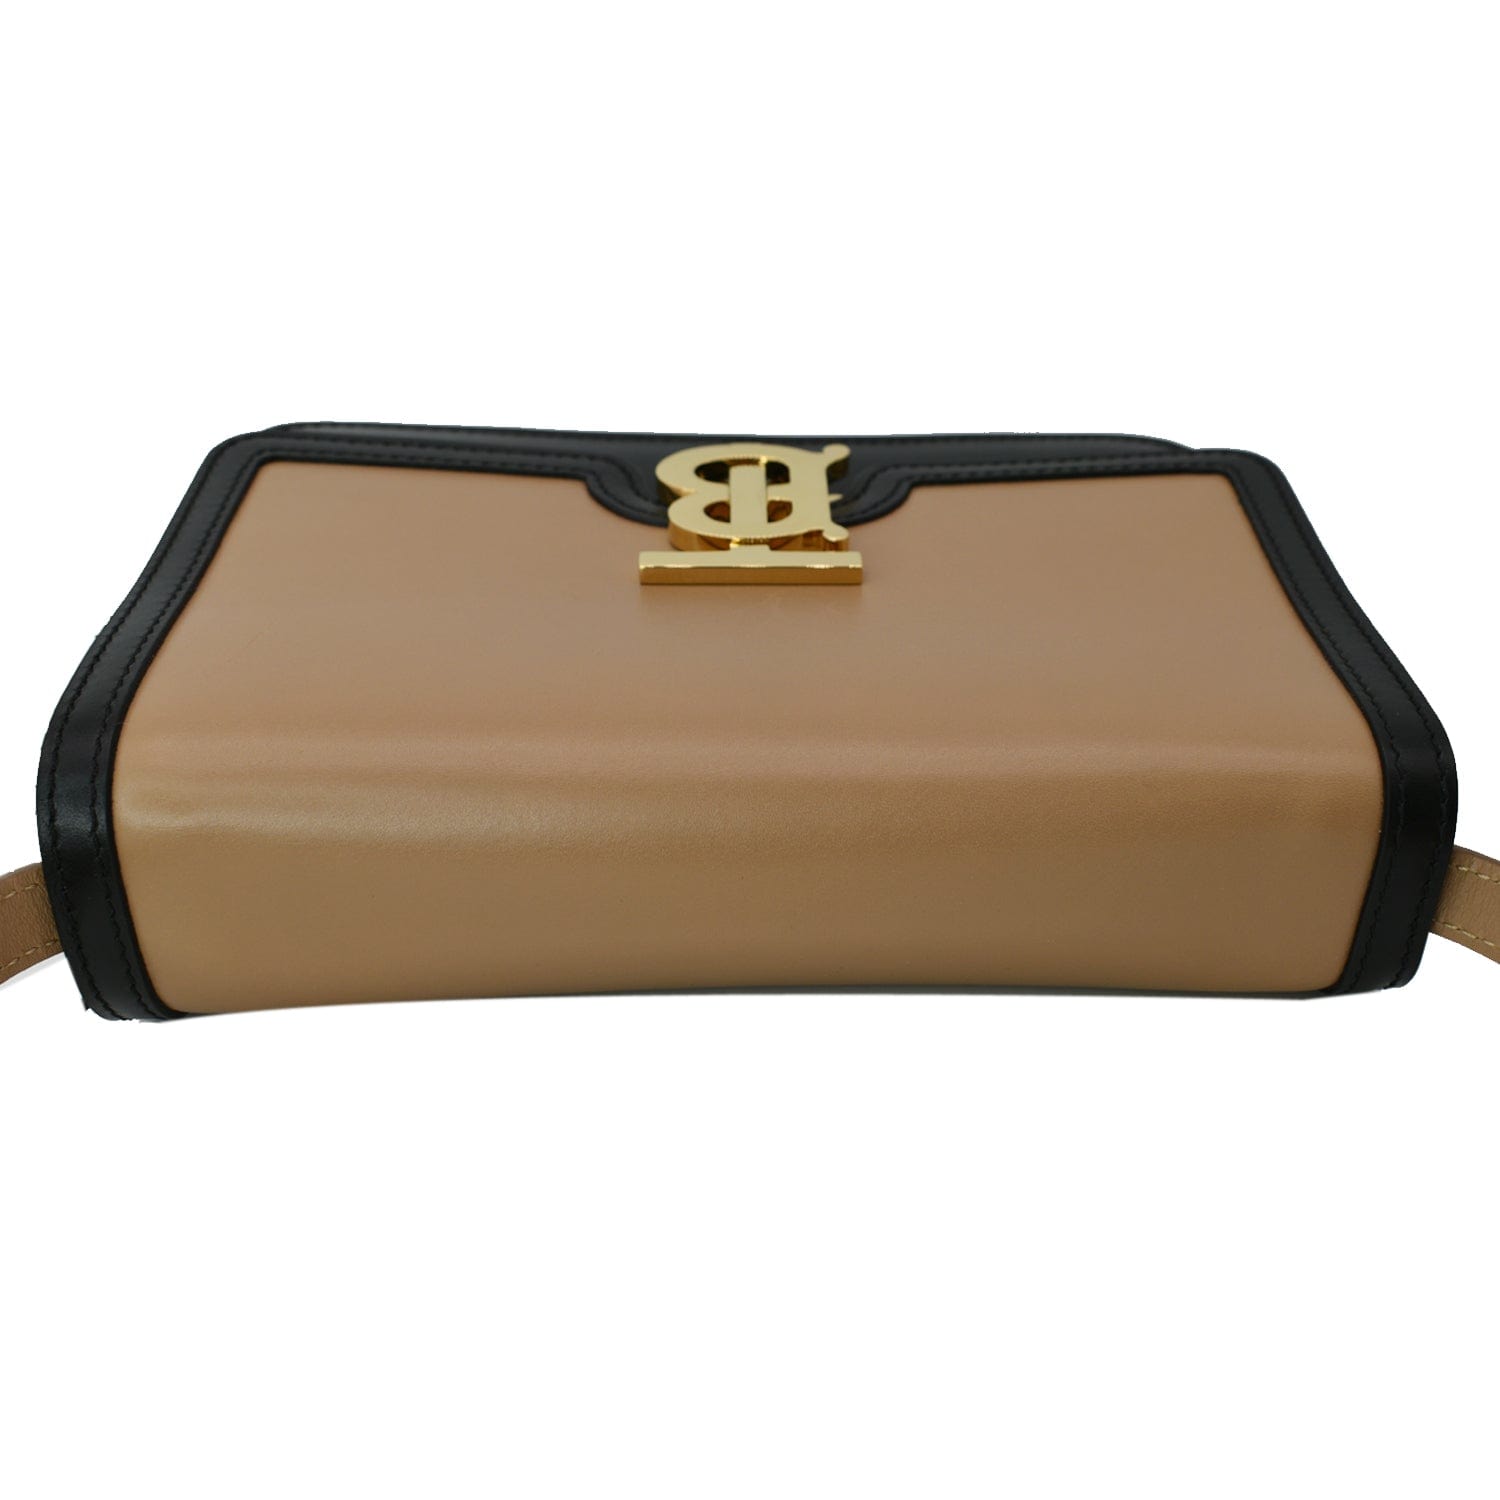 Burberry The TB Logo Bag Black Leather